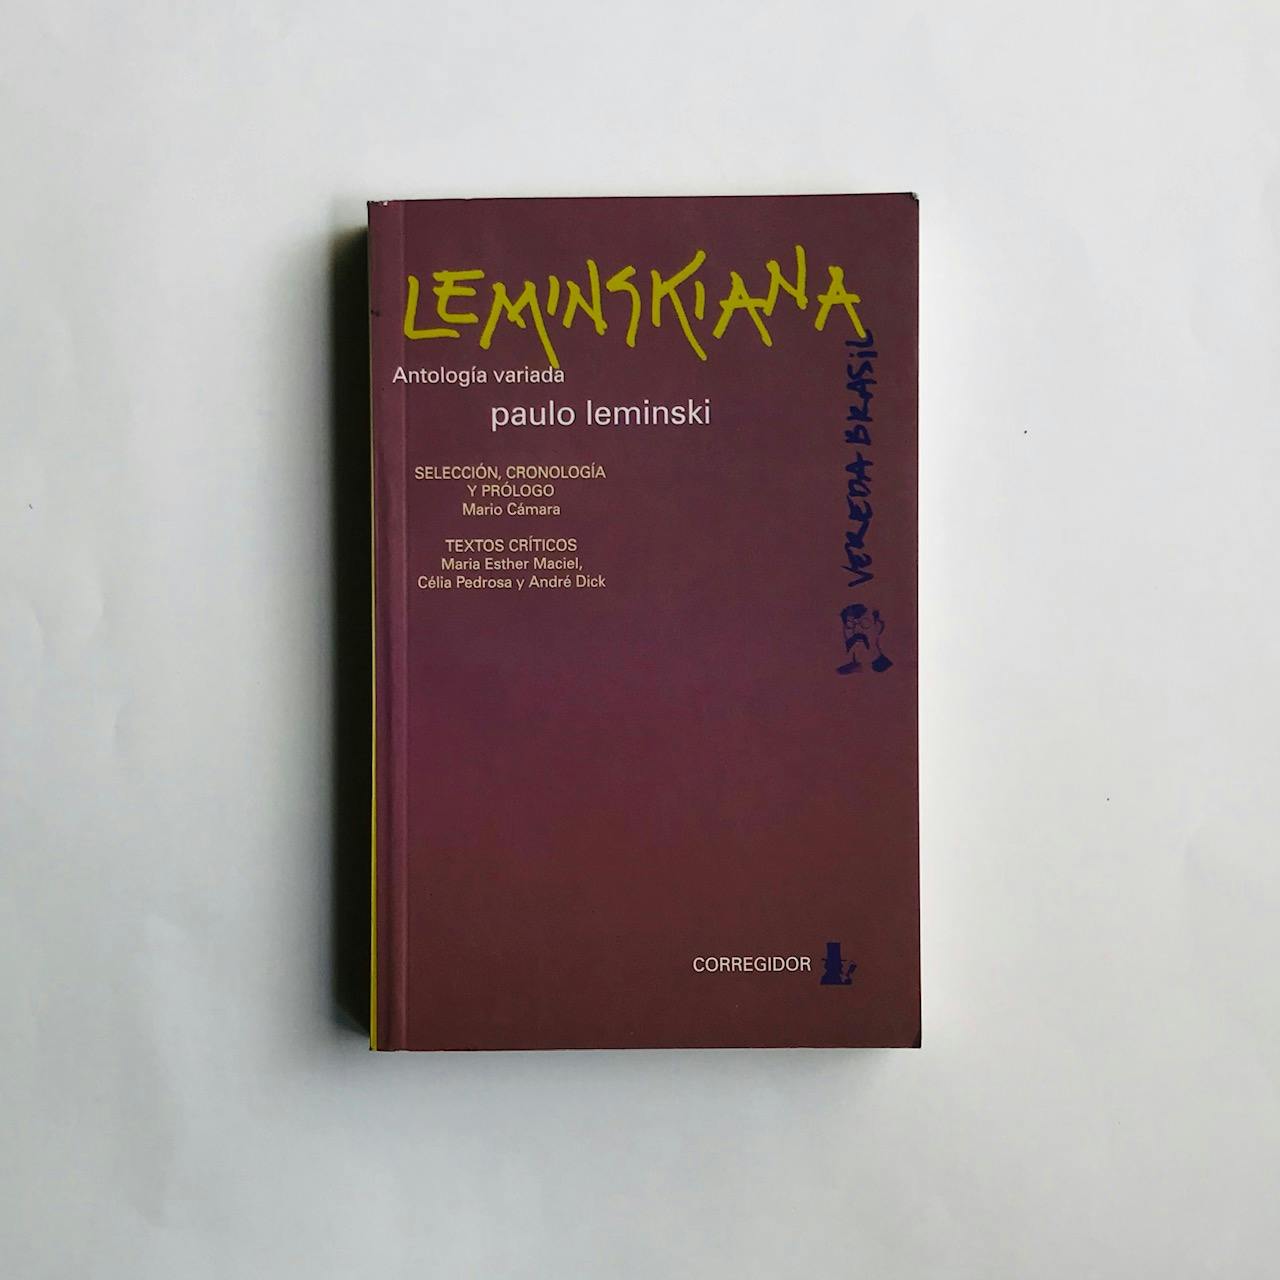 "LEMINSKIANA. ANTOLOGÍA VARIADA", Paulo Leminski